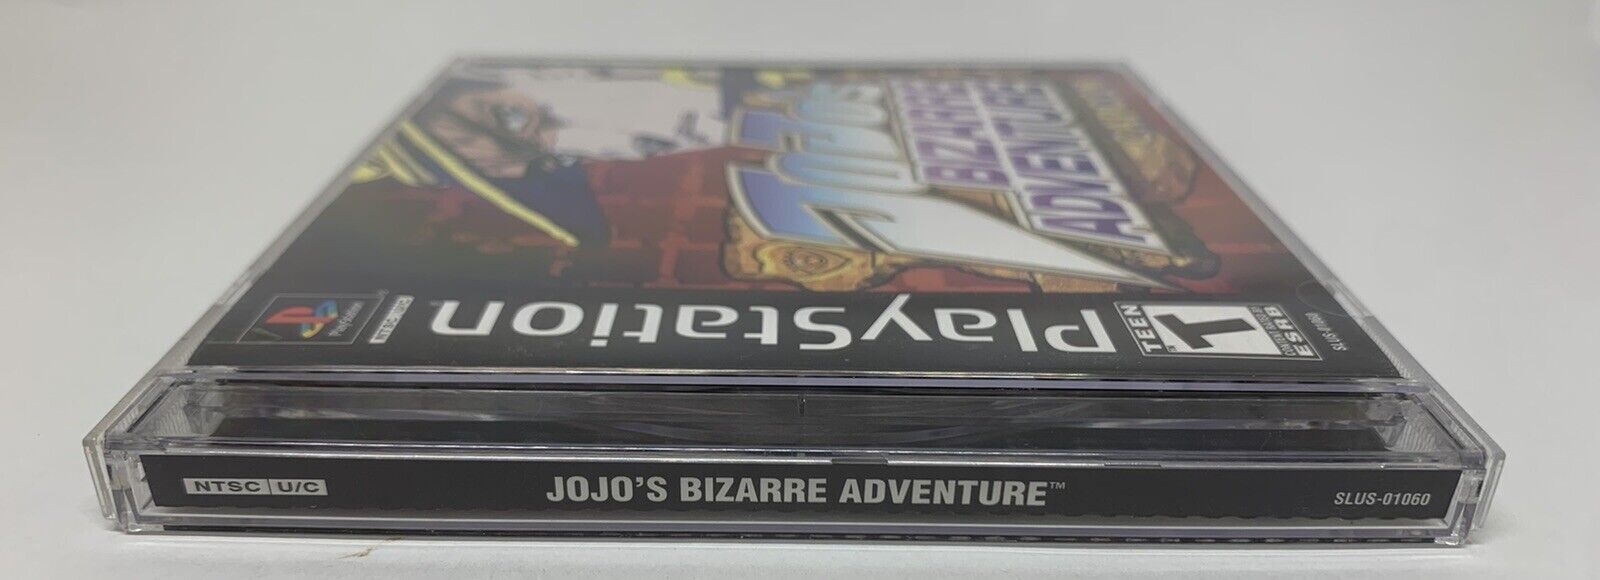 PlayStation -- JOJO'S BIZARRE ADVENTURE -- PS1. JAPAN GAME. work fully.  25584